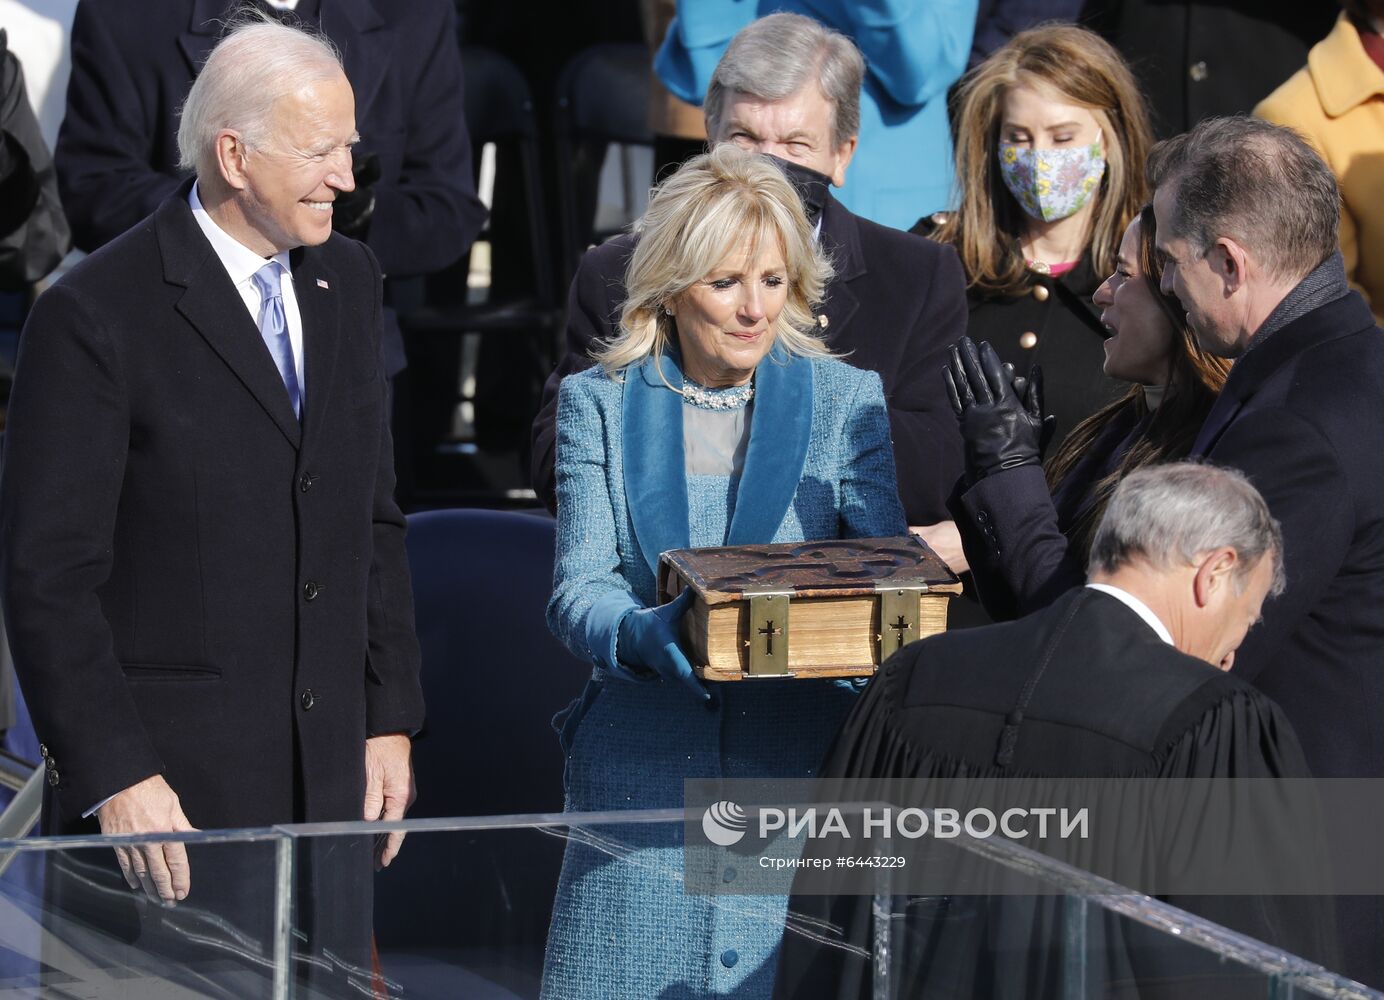 Инаугурация избранного президента США Дж. Байдена